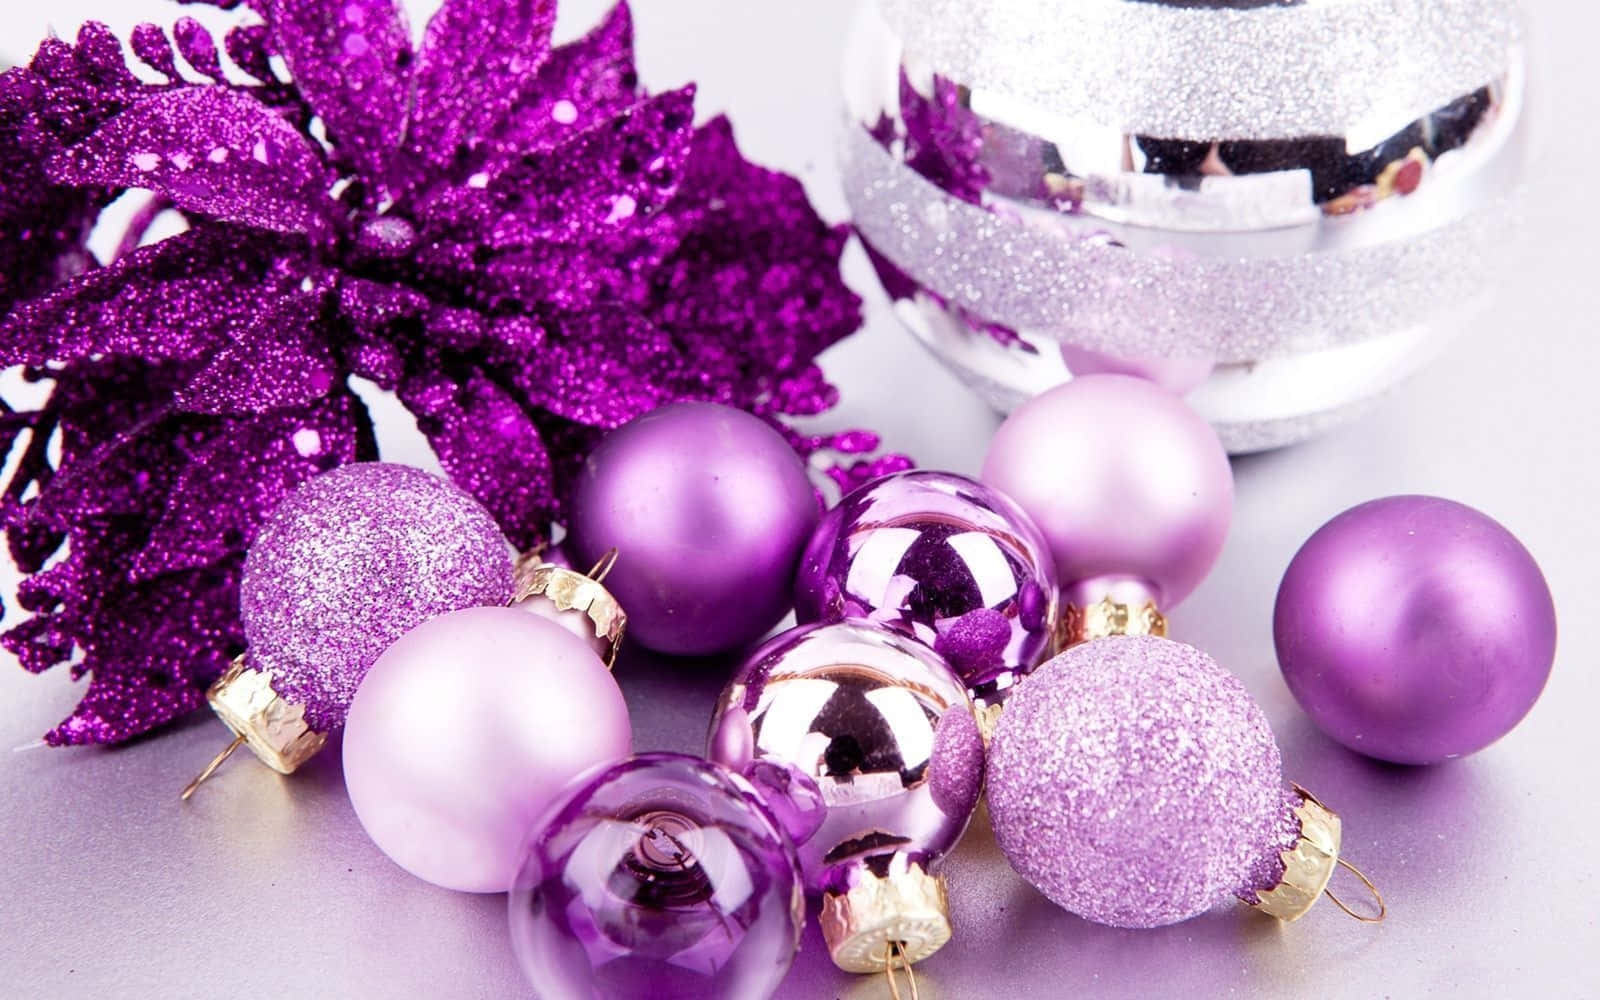 A magical Purple Christmas scene Wallpaper